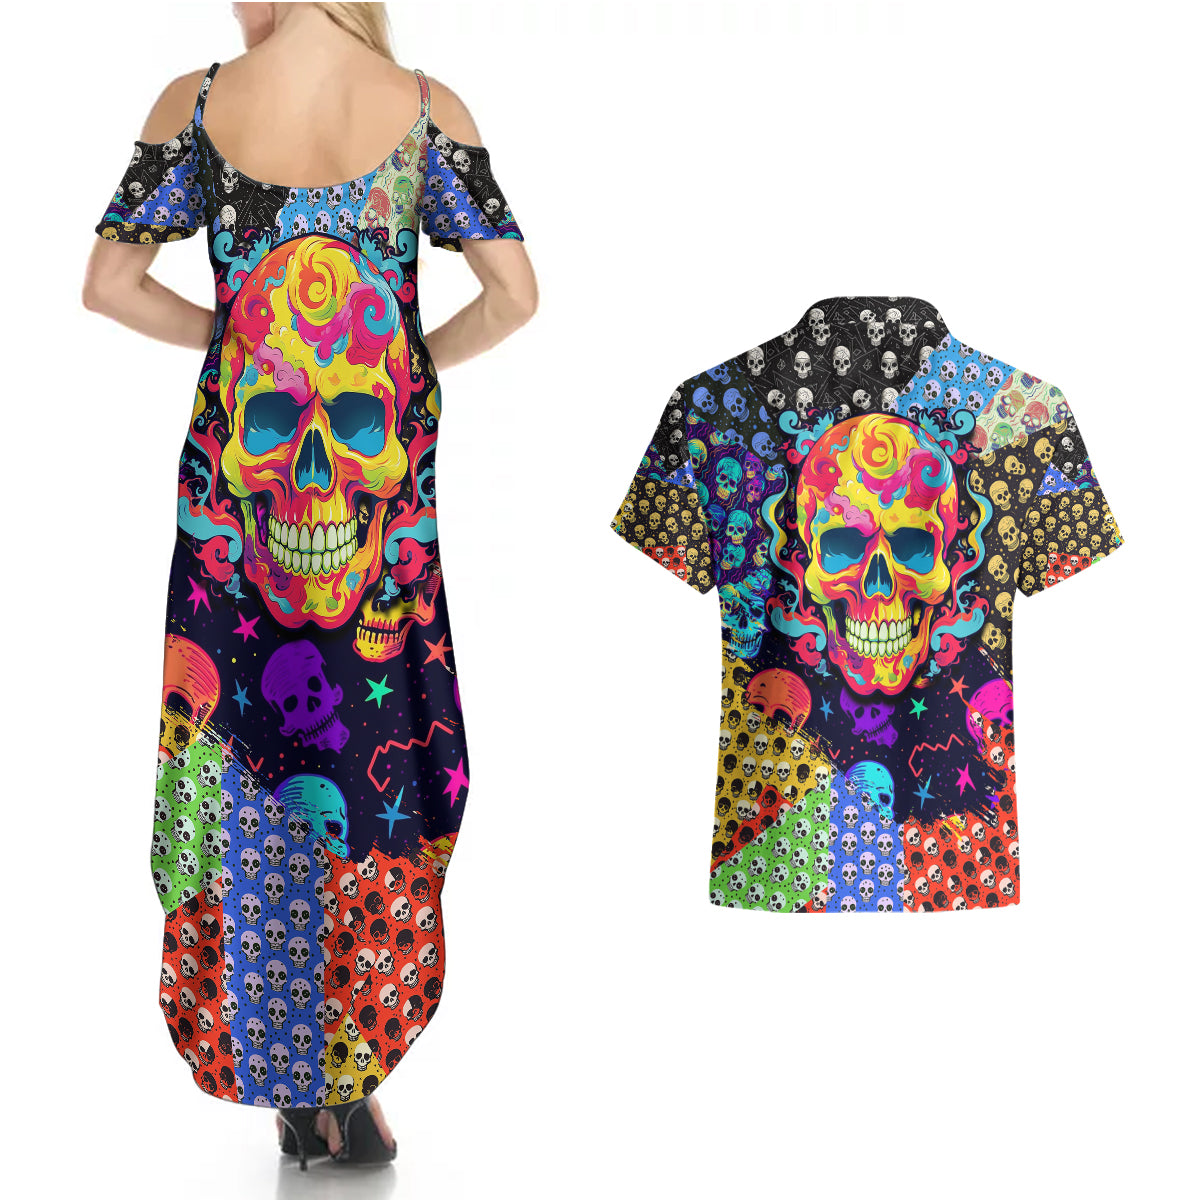 skull-pattern-couples-matching-summer-maxi-dress-and-hawaiian-shirt-colorful-skull-pattern-mix